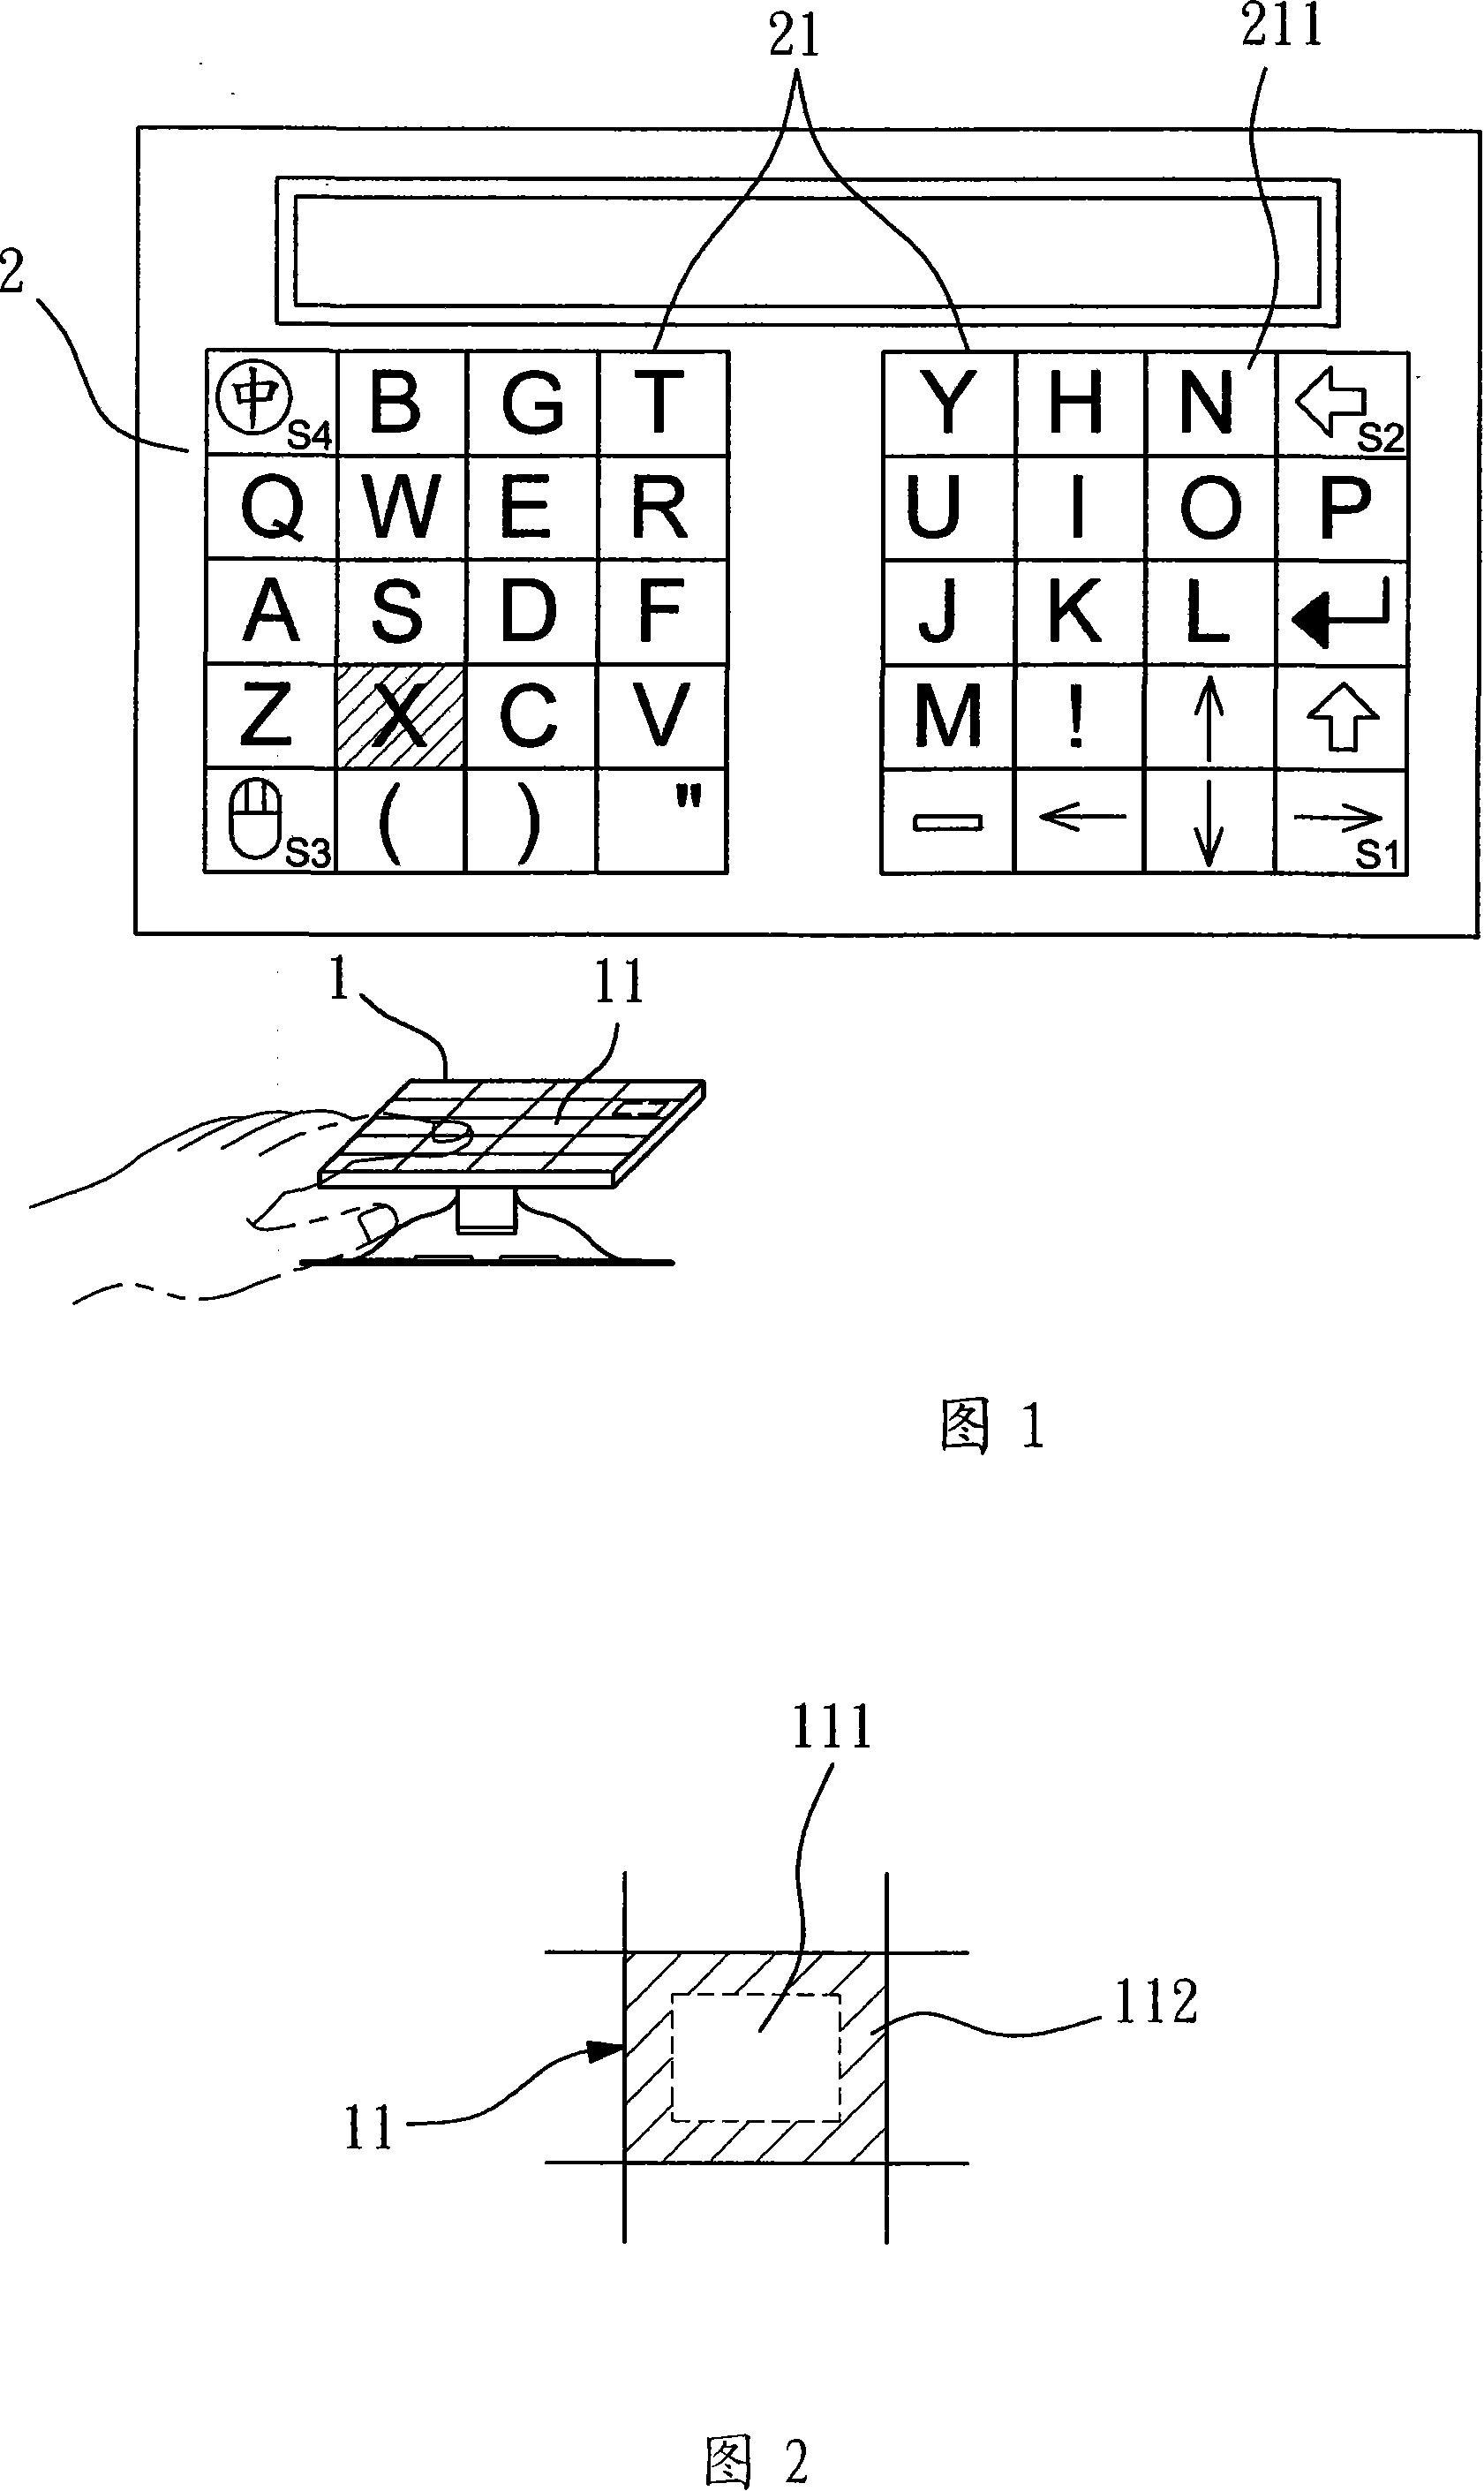 Method for correcting typewriting error according to keyboard character arrangement